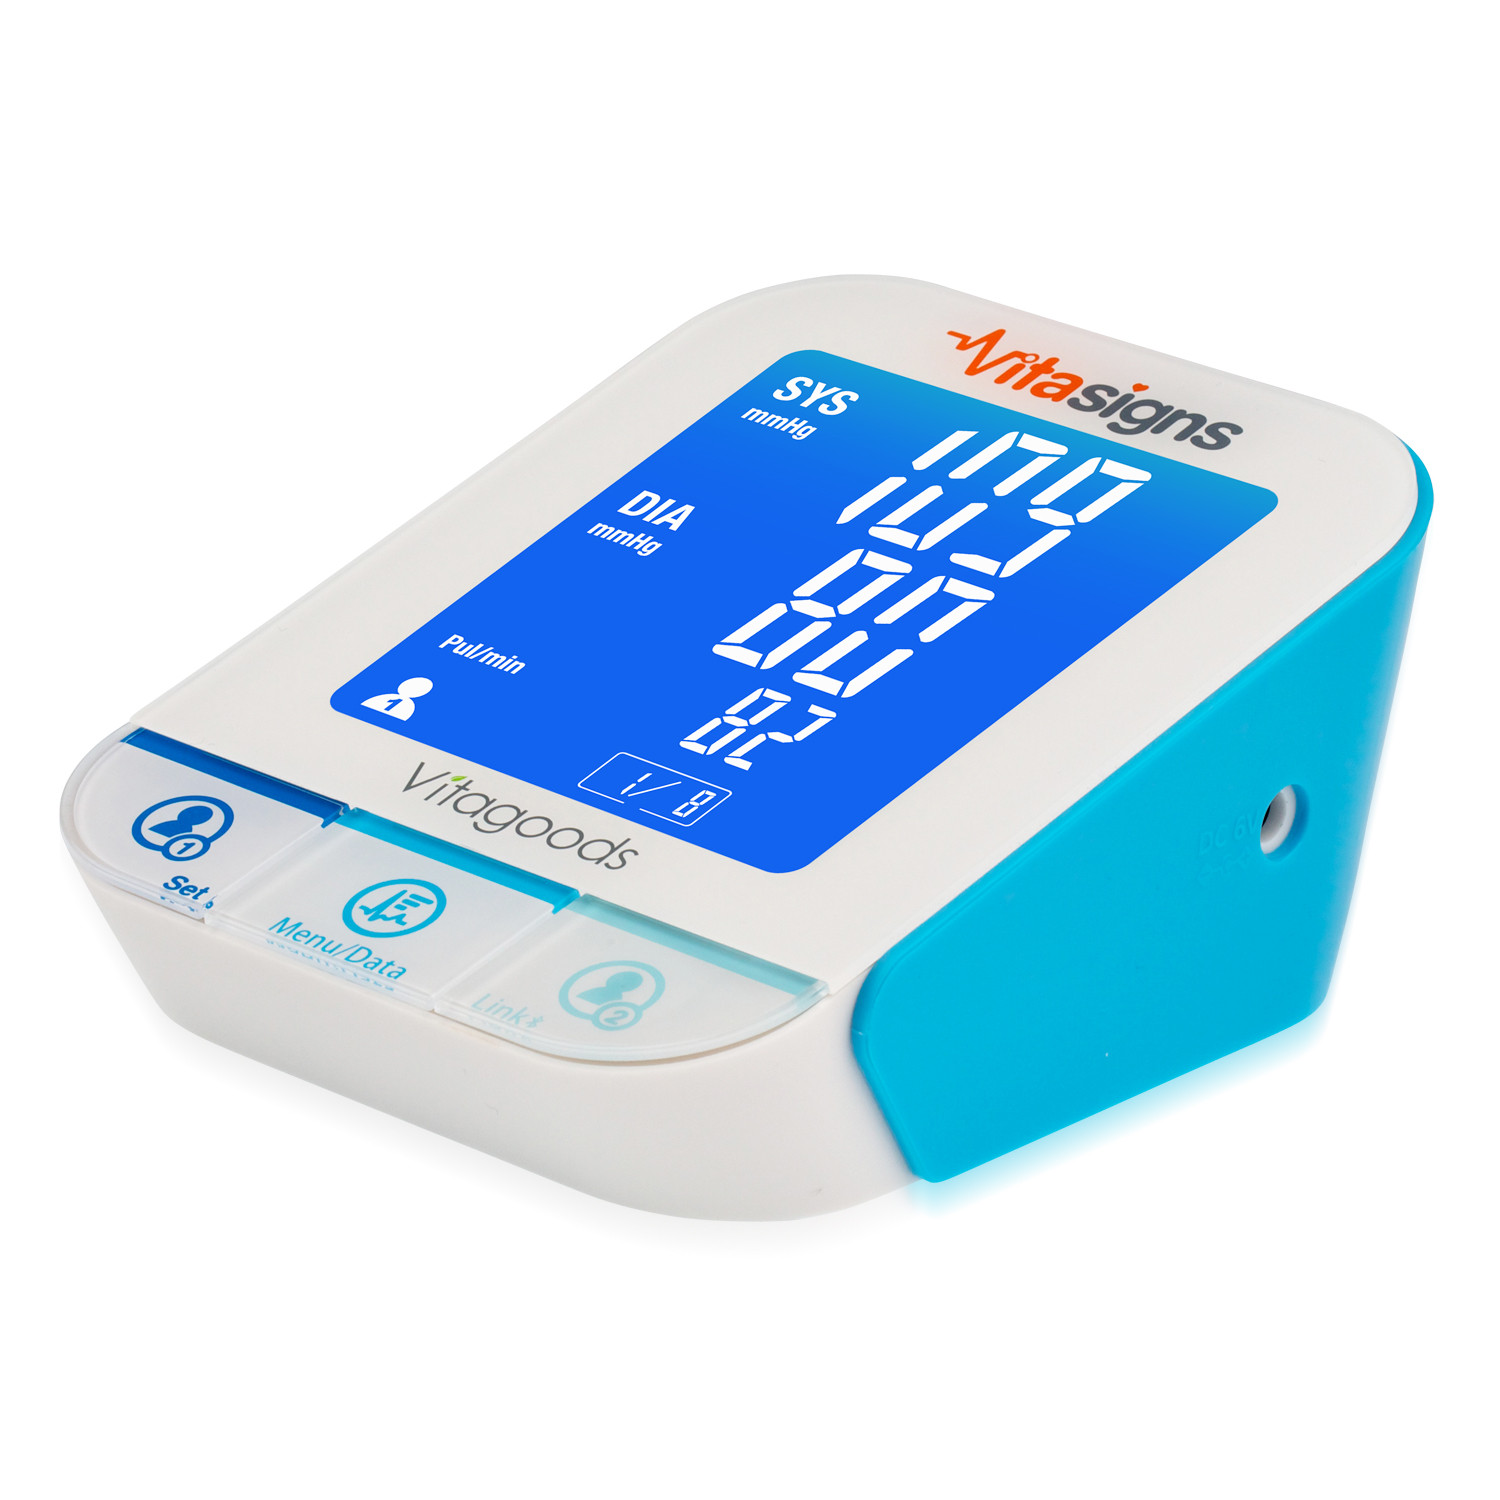 VitaGoods Smart Bluetooth Body Analyzer Scale - Vs 3200